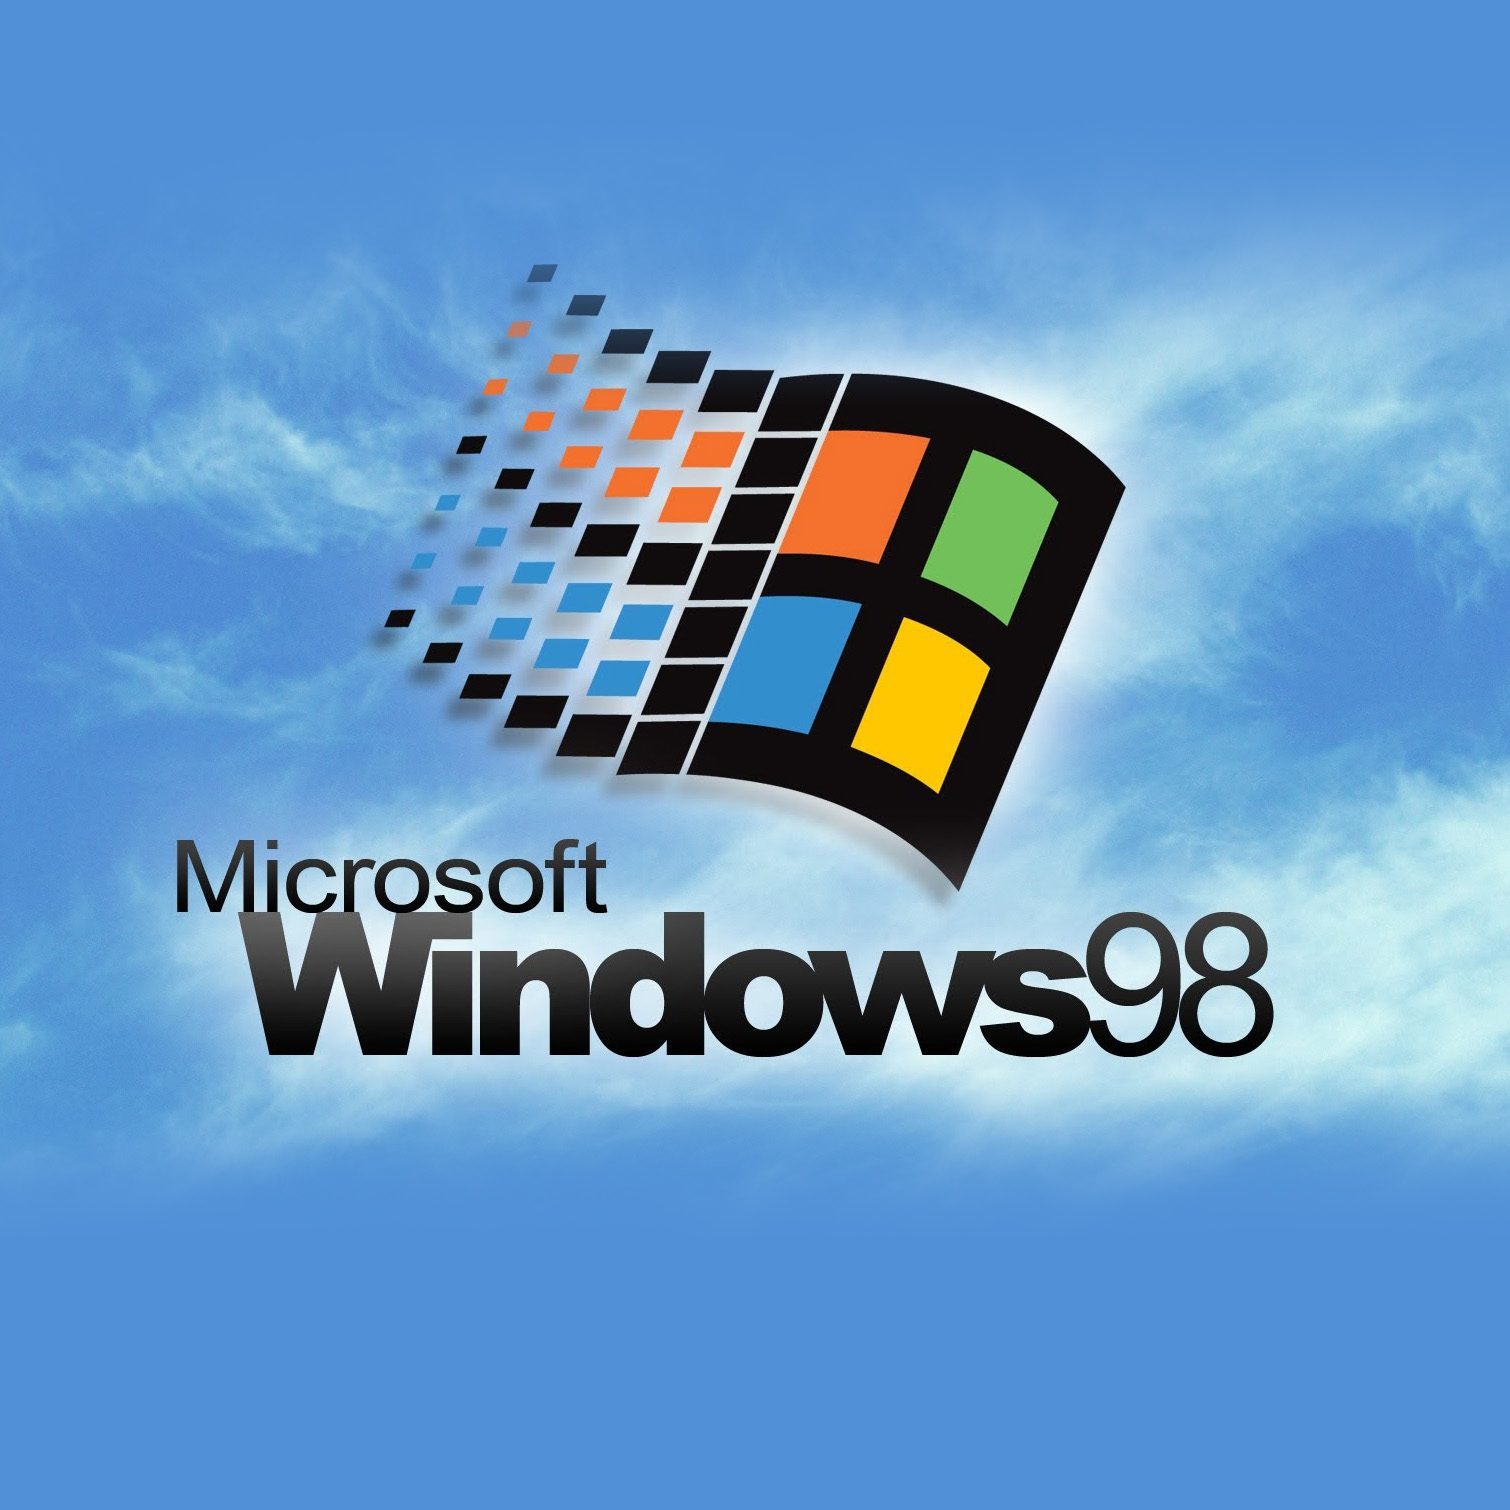 Windows 98 A Nostalgic Return To The Past Botland